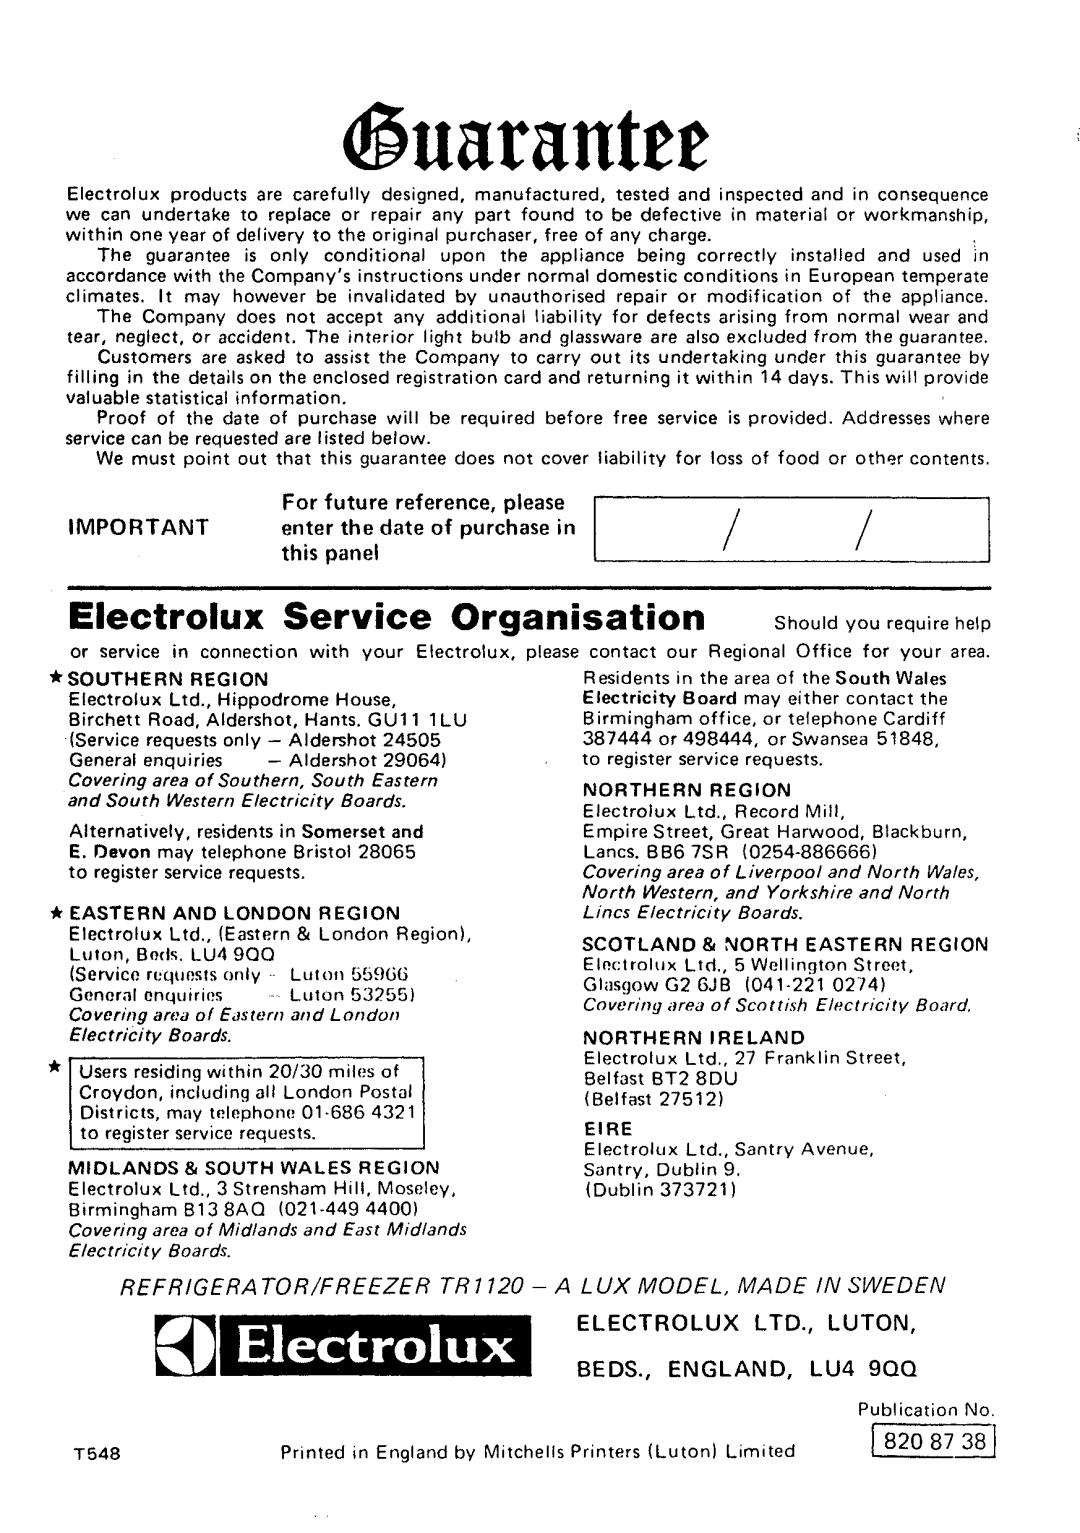 Electrolux TR1120 manual 